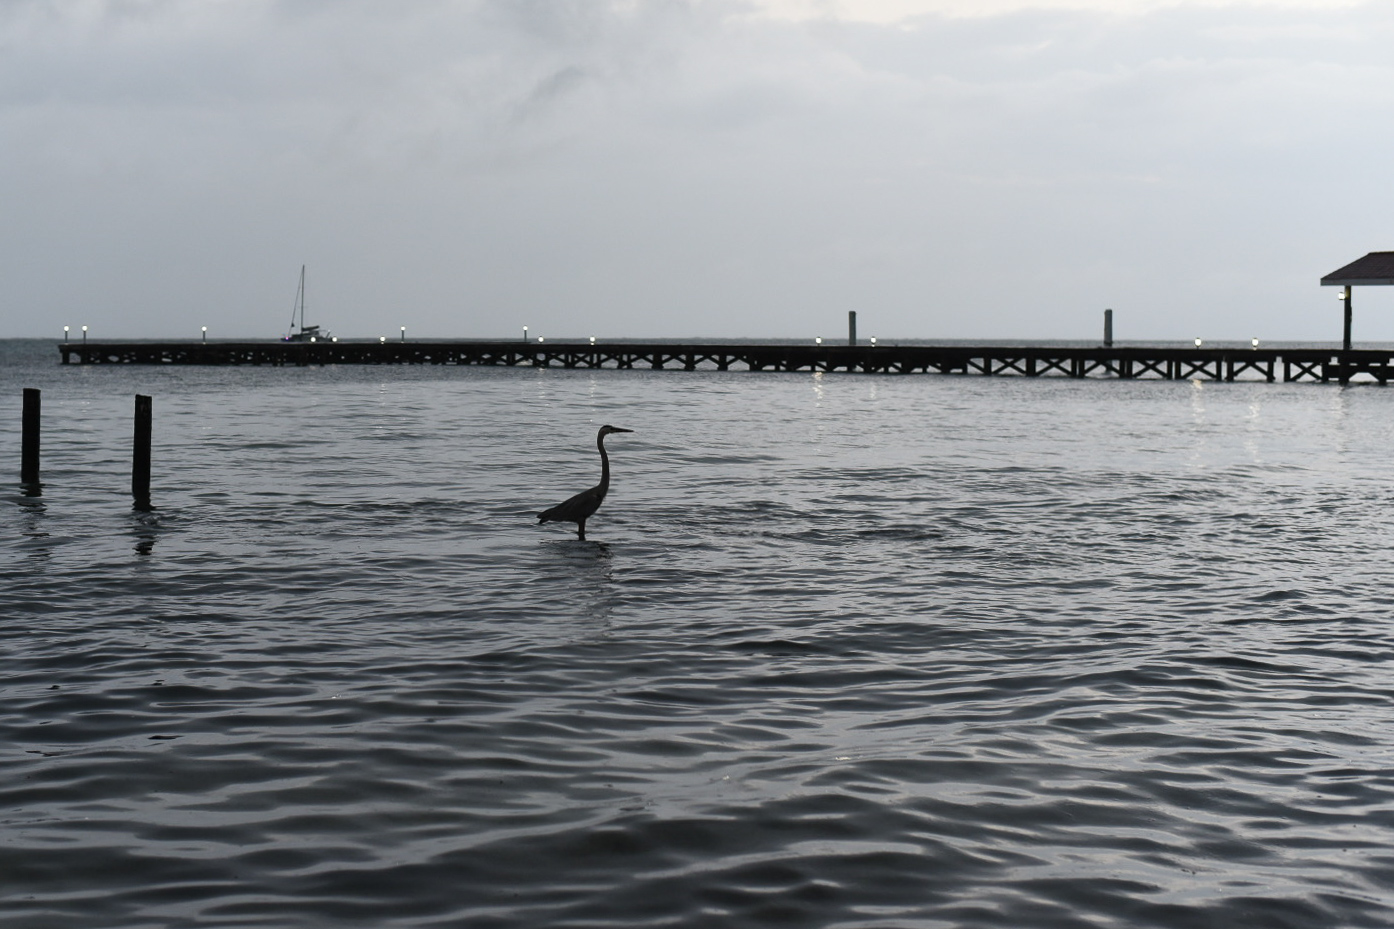 sandhill crane standing in the ocean near a pier in San Pedro, Belize